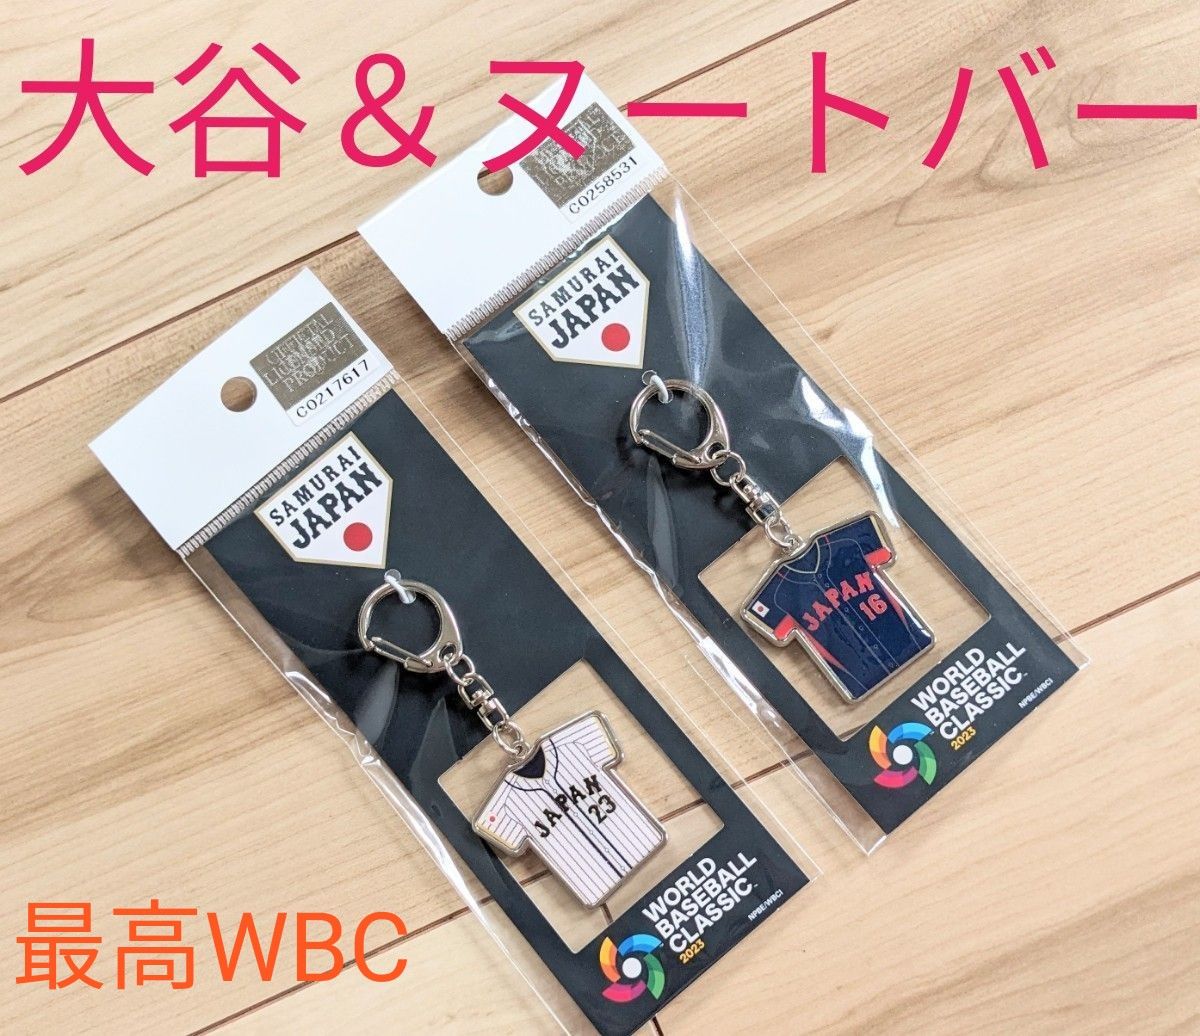 WBC 侍JAPAN キーホルダー 大谷翔平&ヌートバー 完全受注生産品 入手 